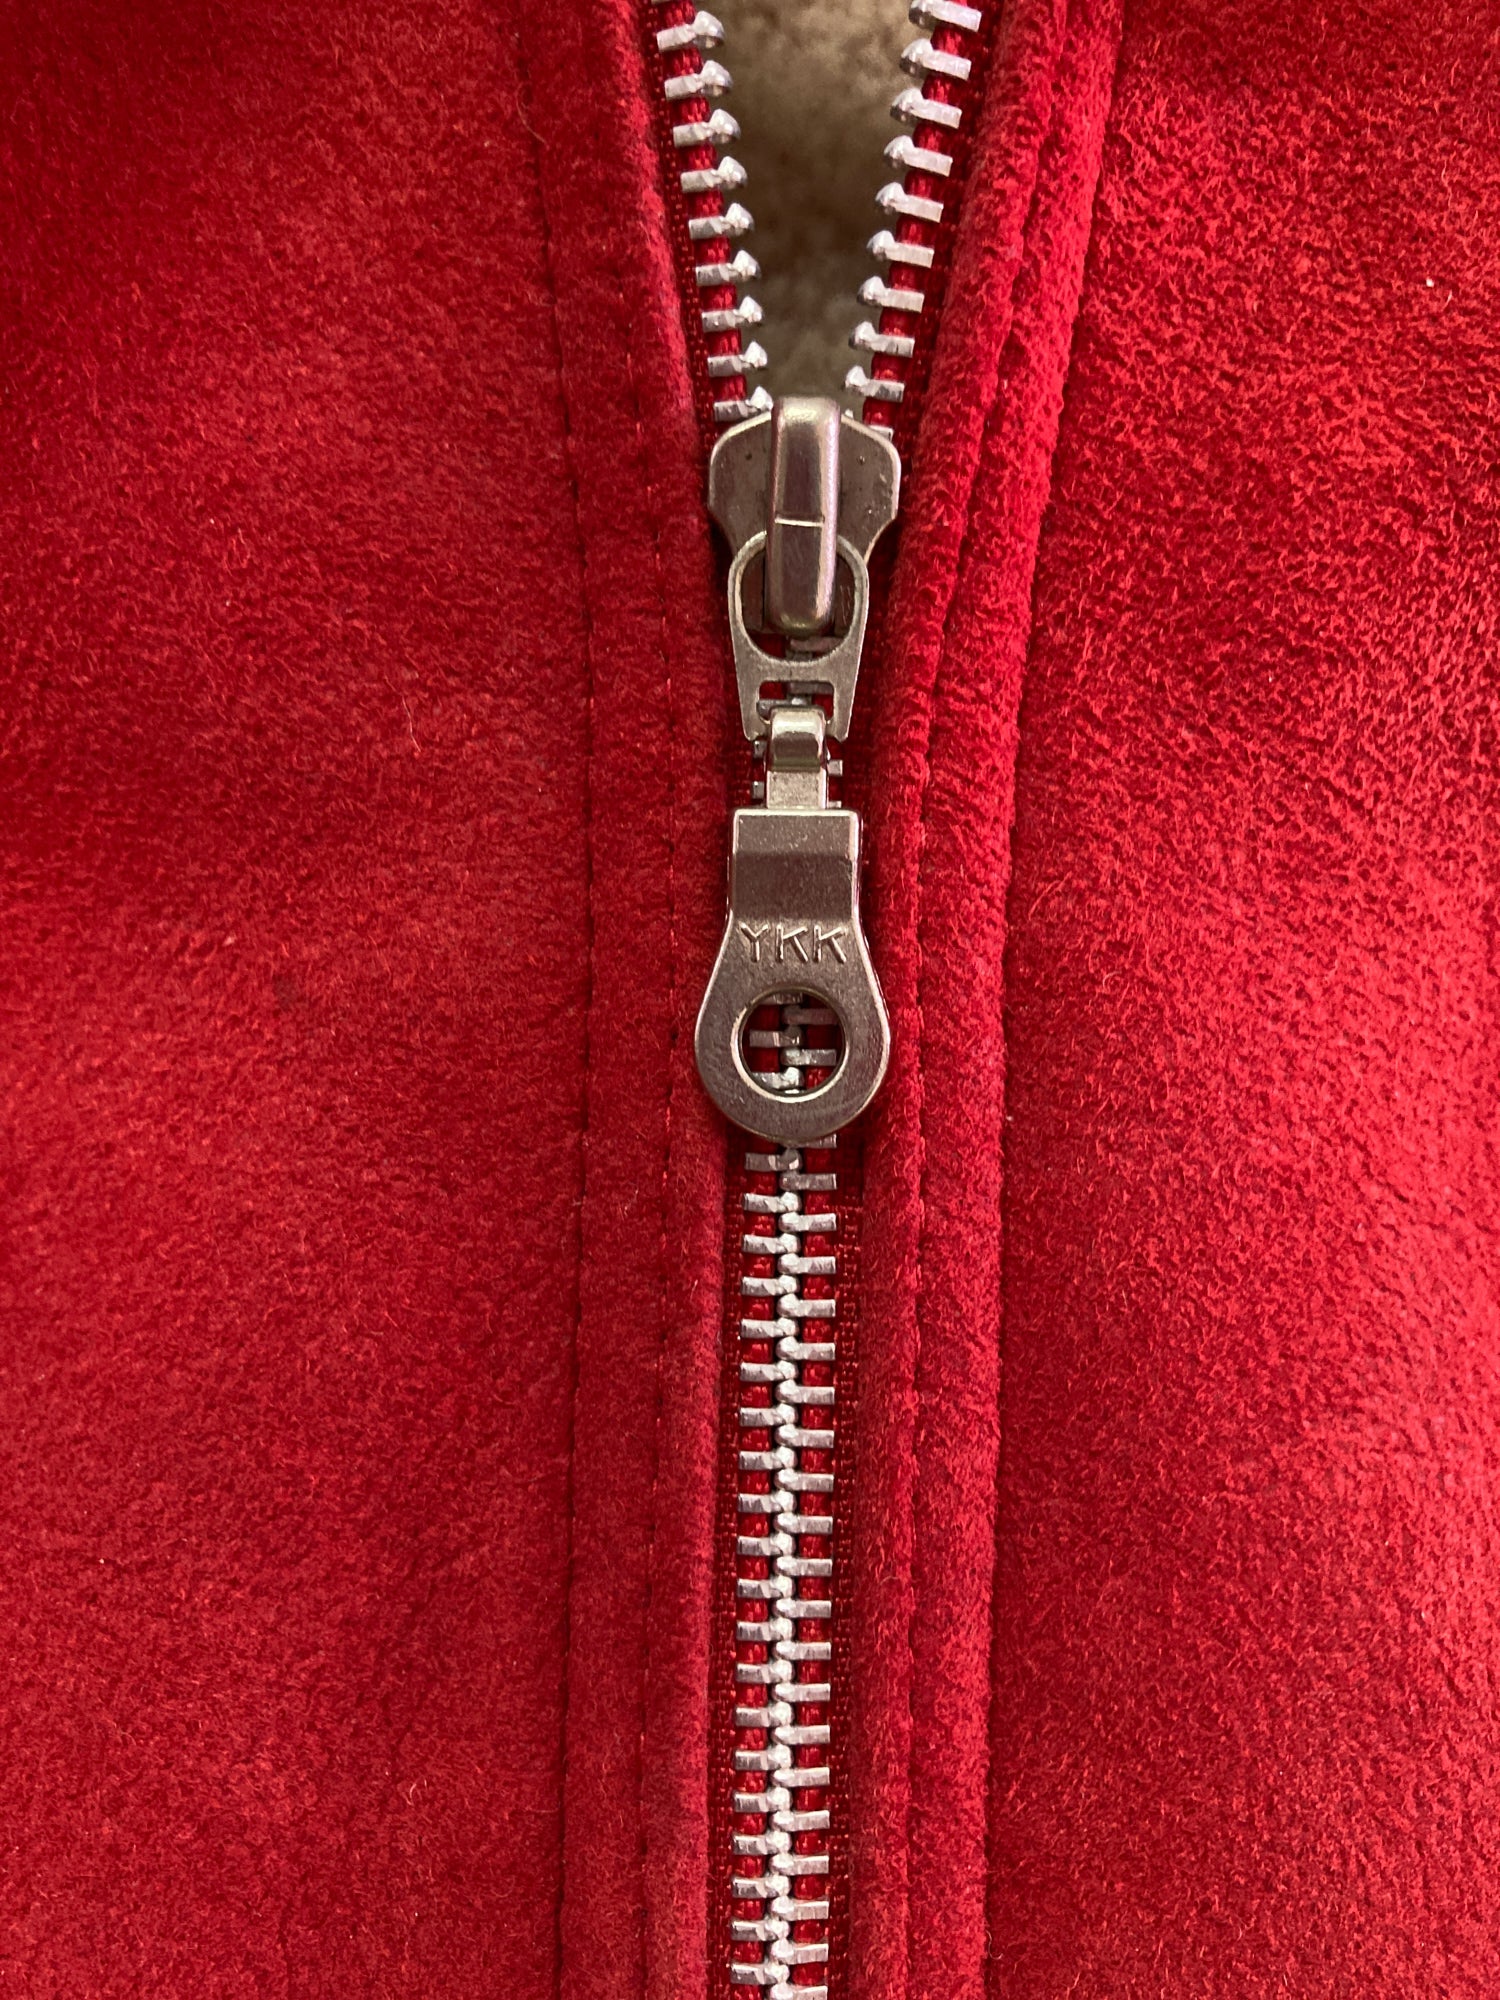 vintage Marsil Paris red leather mouton zip jacket - womens 36 S XS